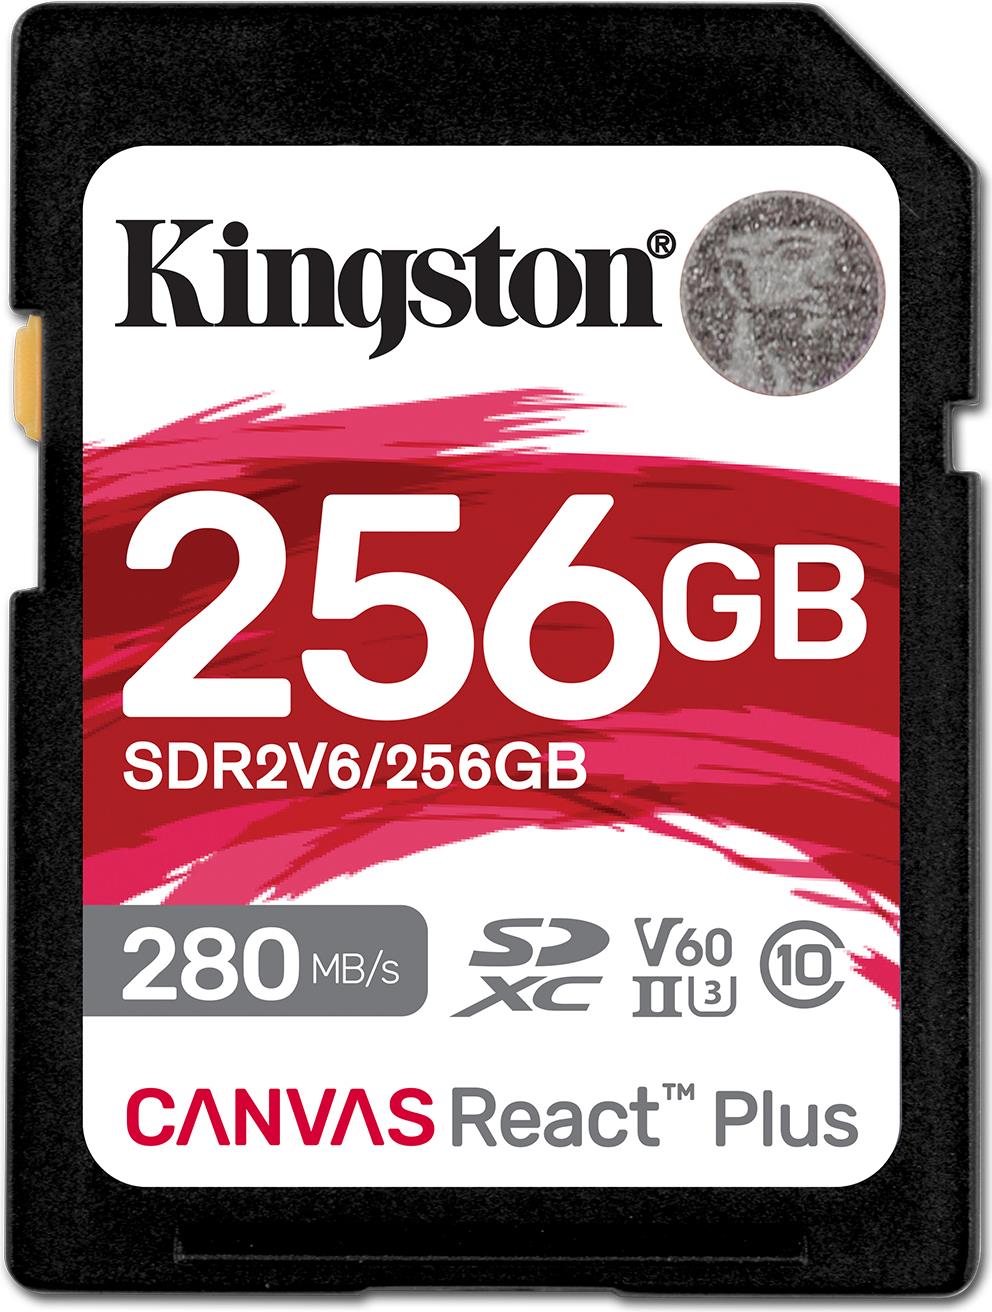 Kingston Technology 256GB Canvas React Plus SDXC UHS-II 280R/150W U3 V60 for Full HD/4K (SDR2V6/256GB)